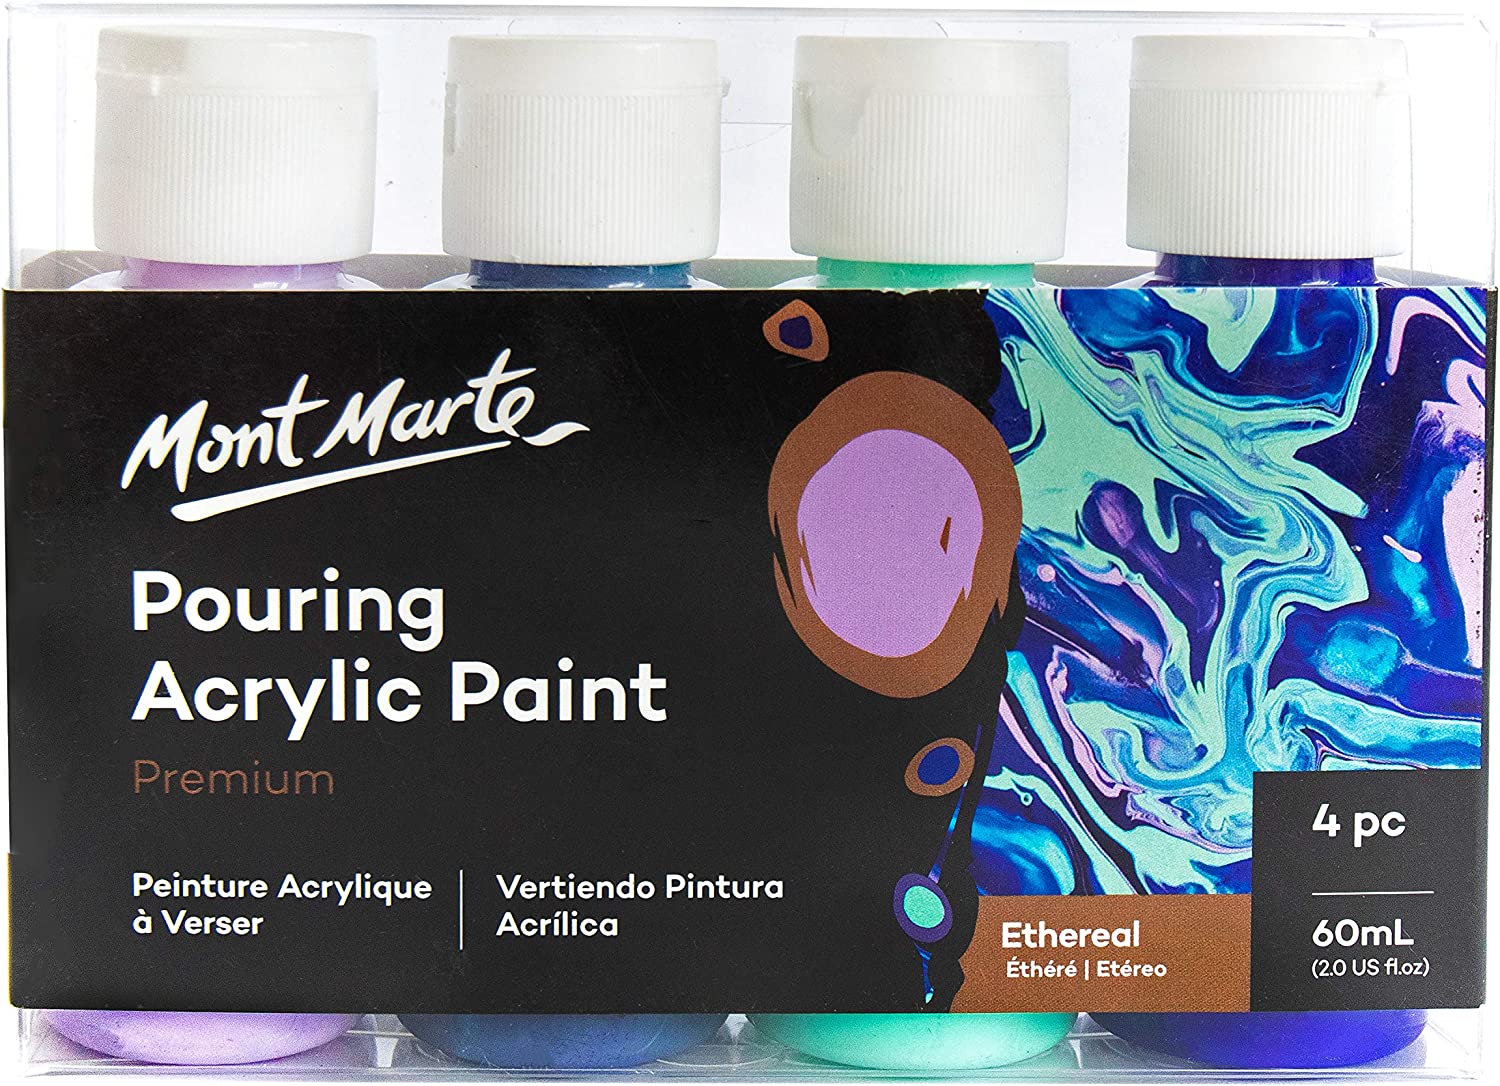 Mont Marte Pouring Acrylic Paint Set Premium 4pc x 60ml Ethereal